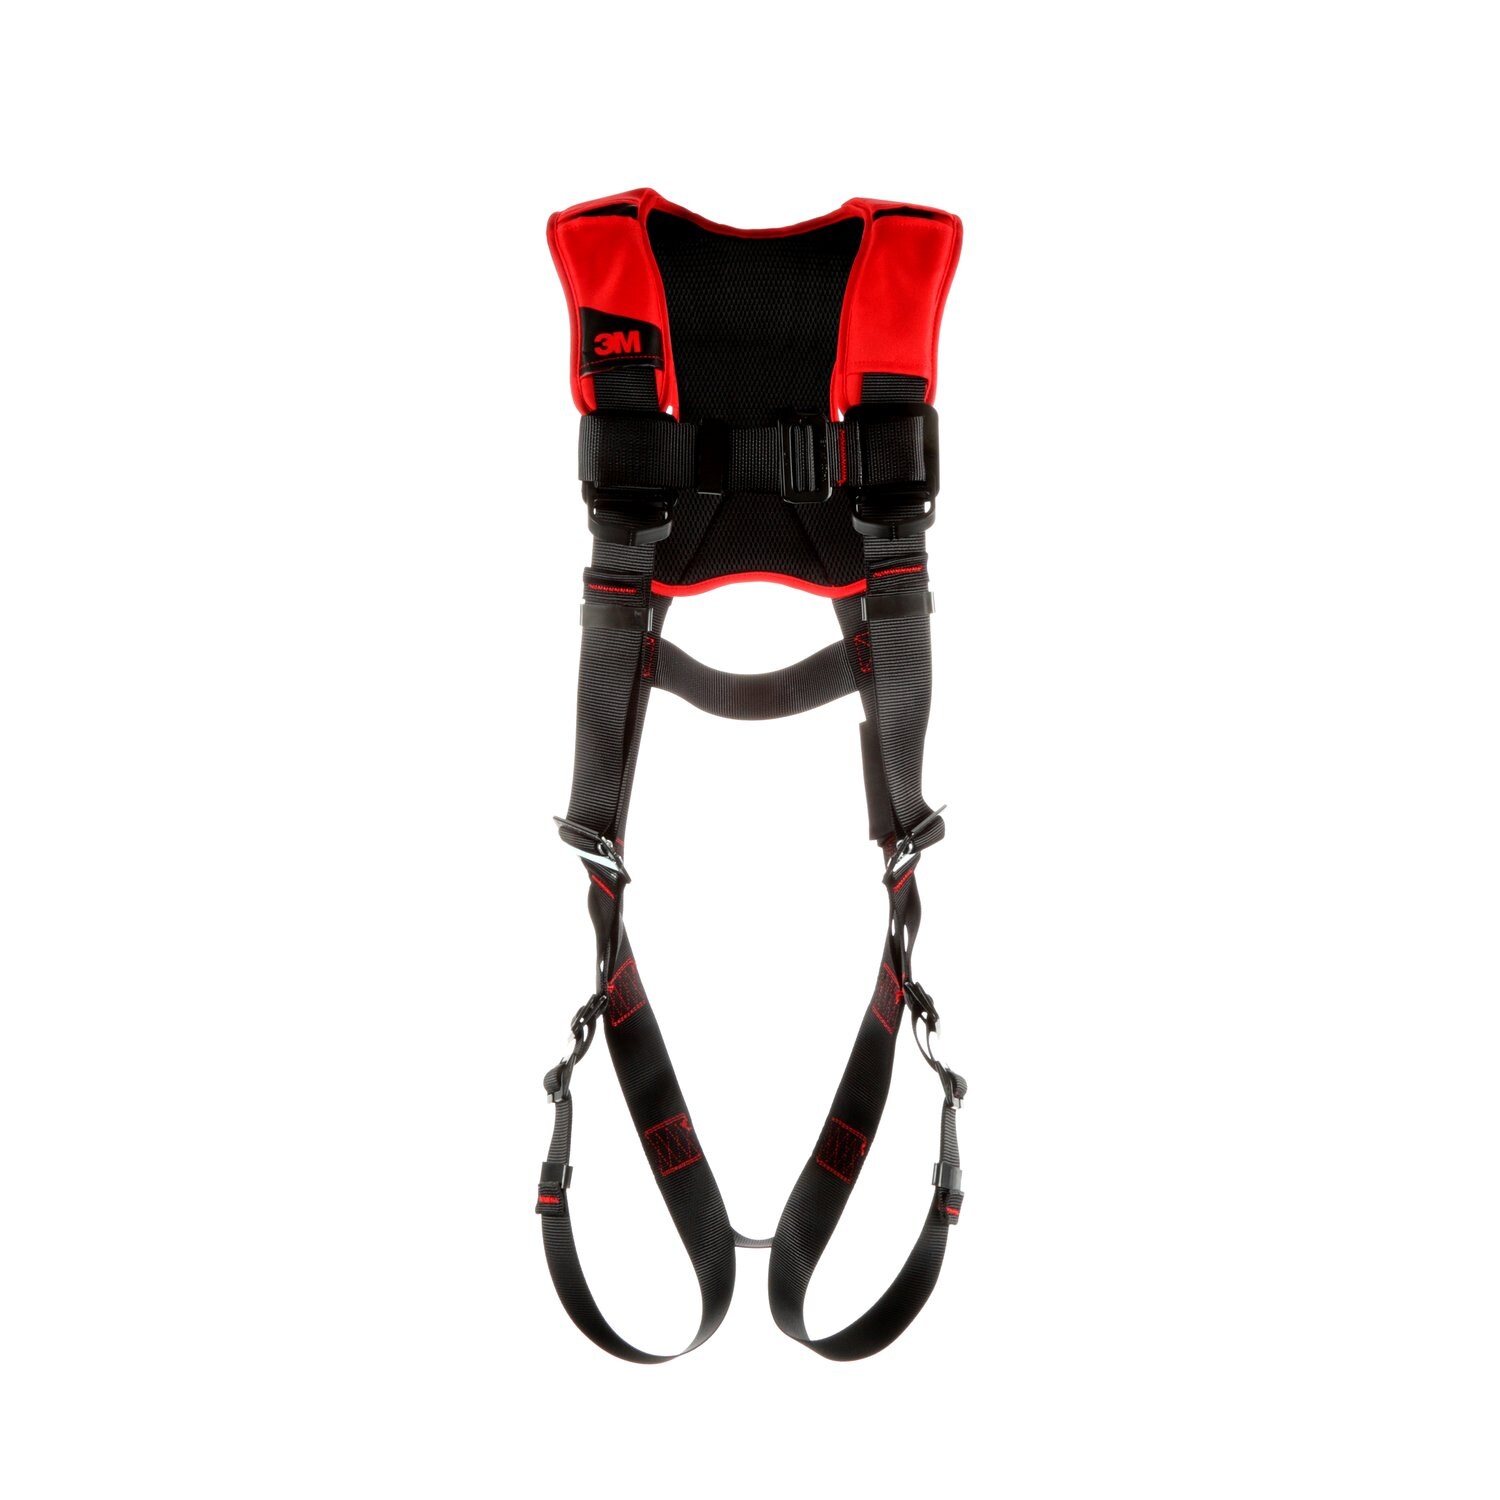 7012816700 - 3M Protecta P200 Comfort Vest Safety Harness 1161424, Medium/Large